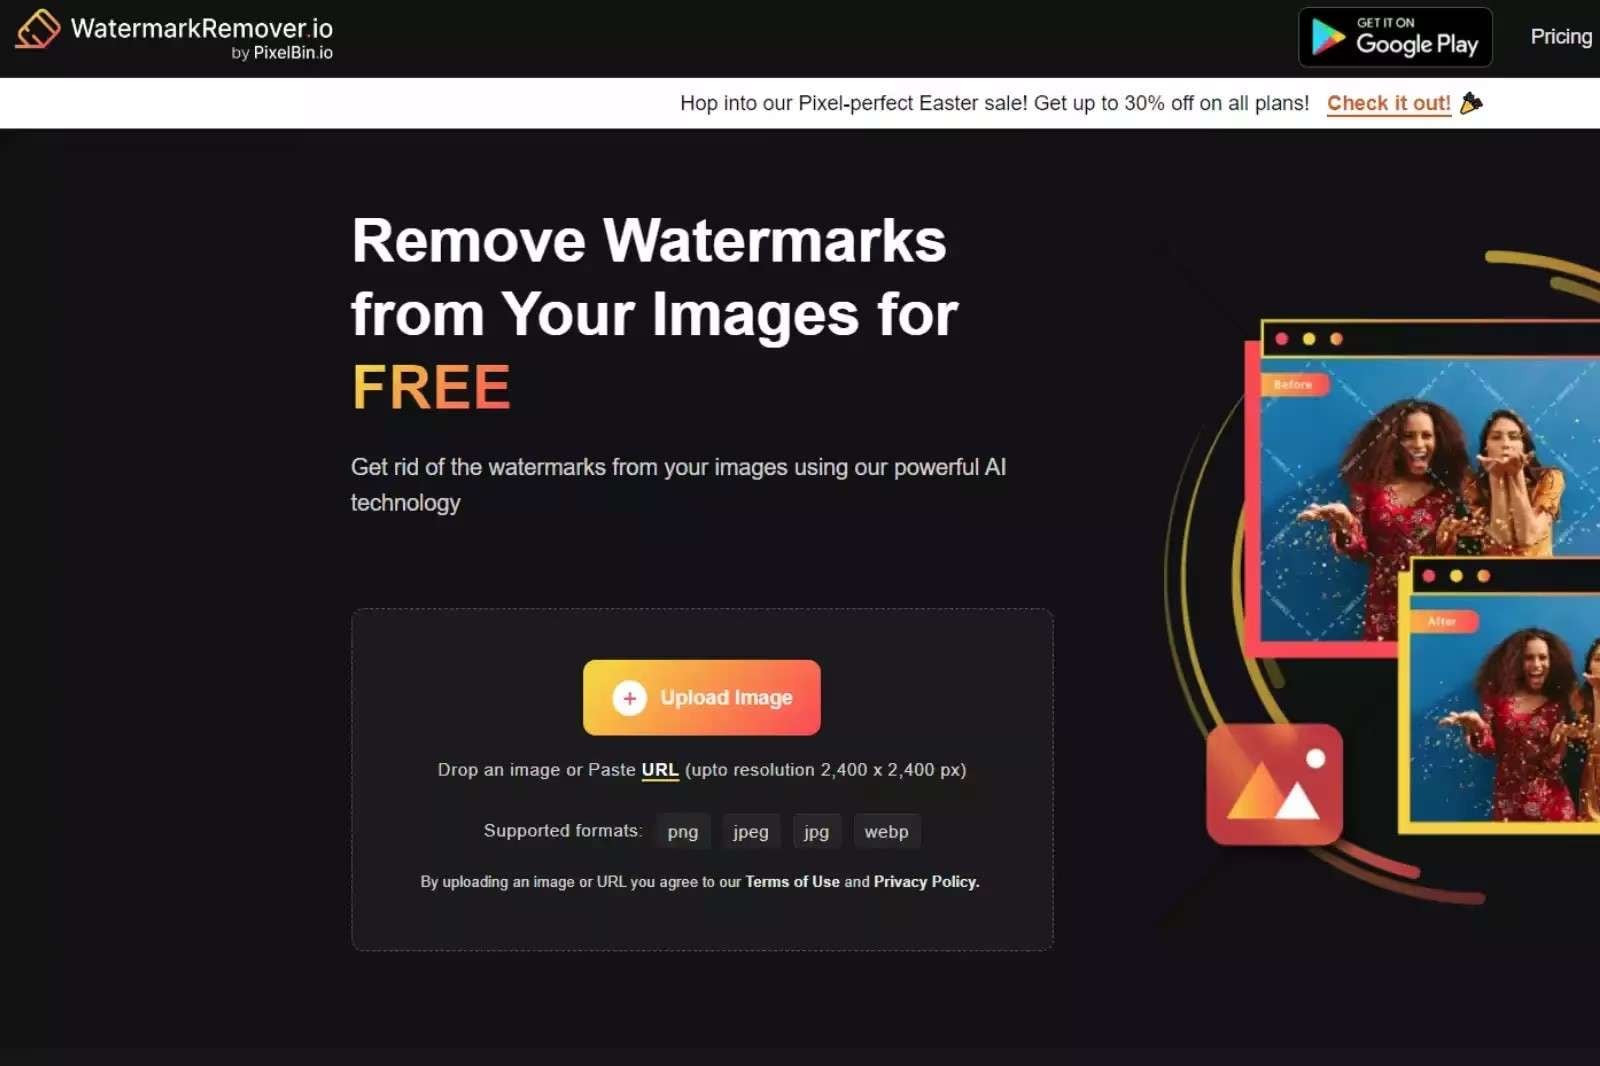 watermark remover.io